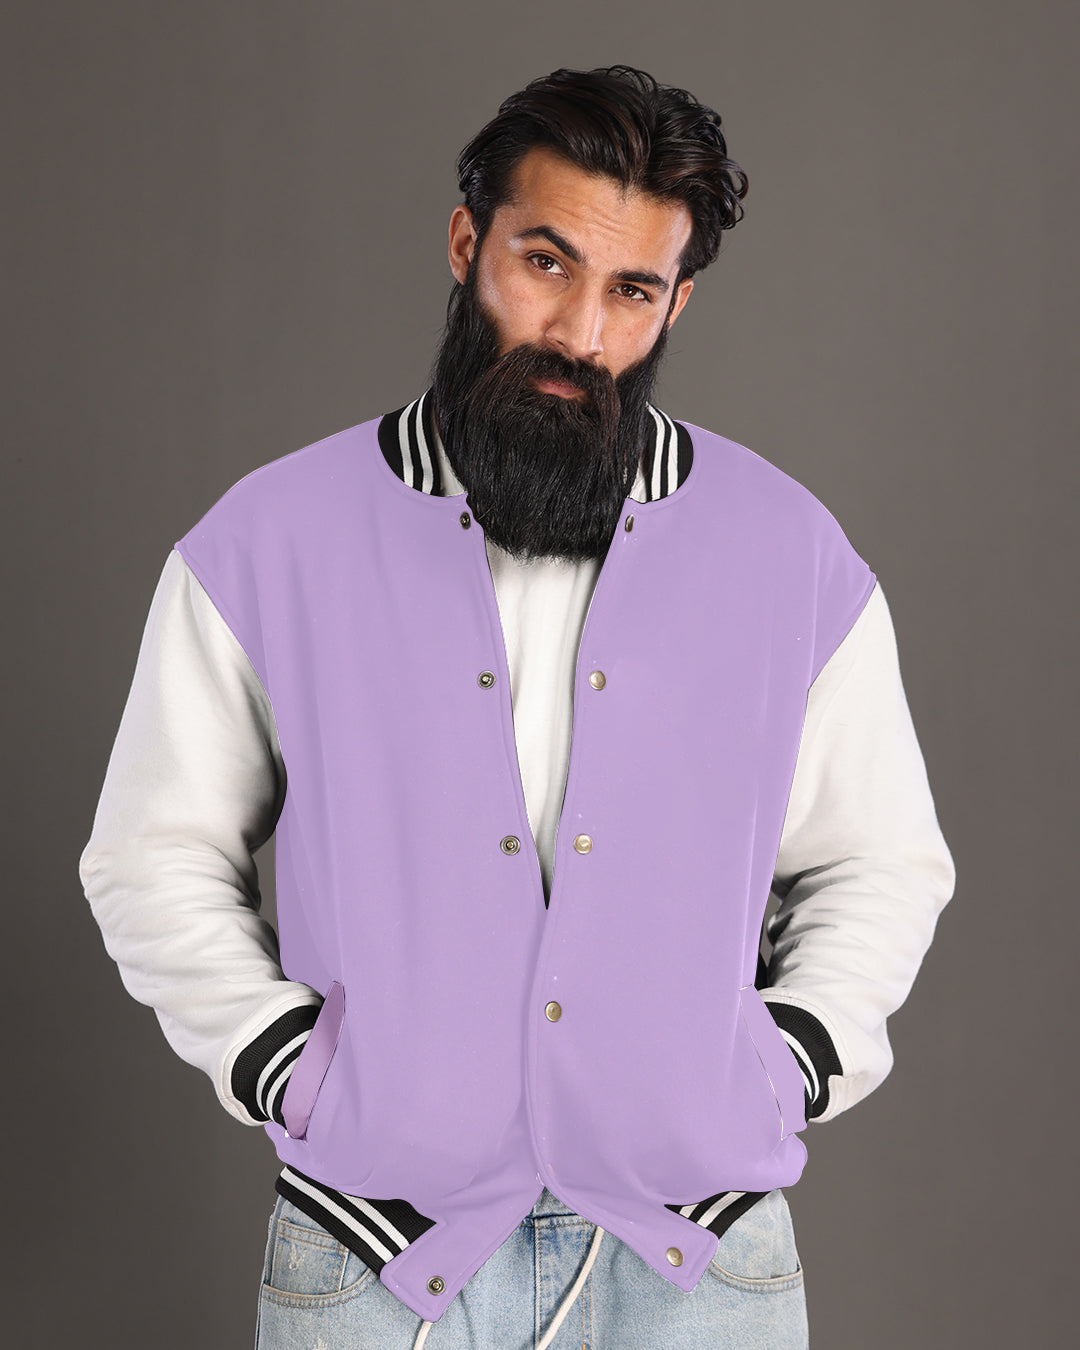 Men's Trendy Purple Varsity Jacket with Tiger Artwork